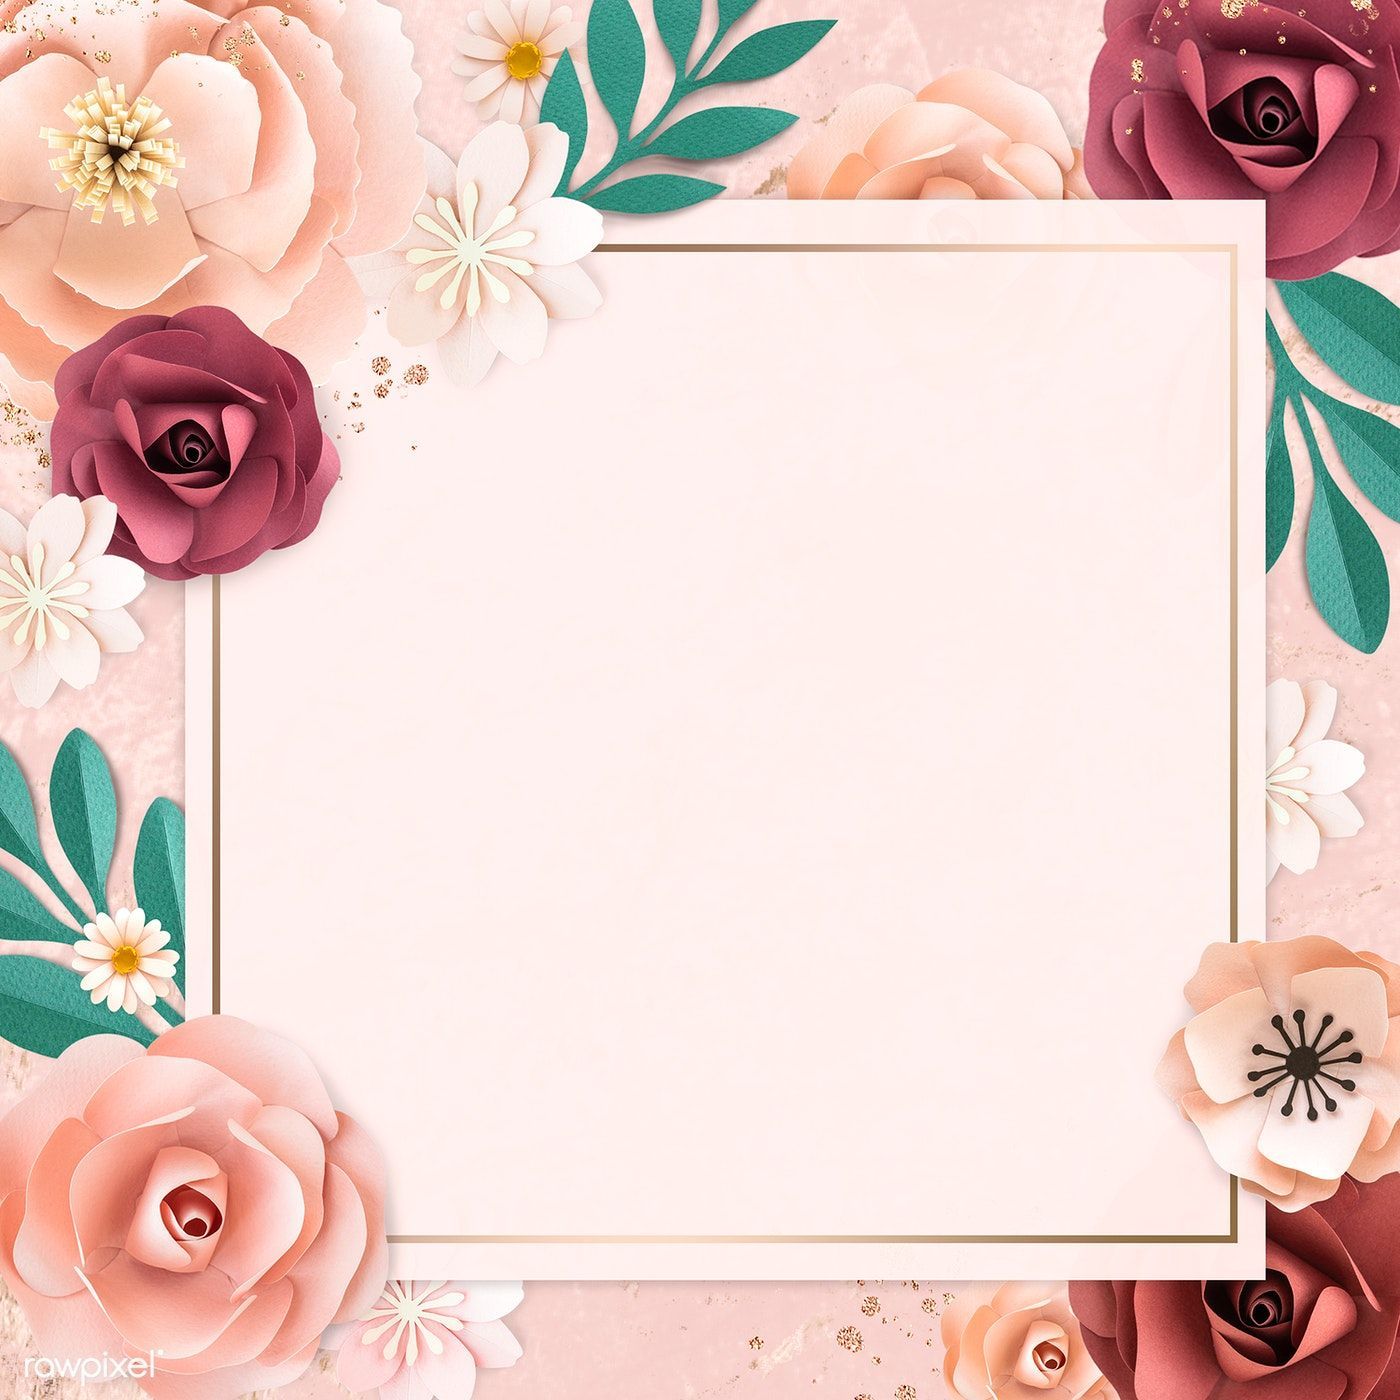 Flower background wallpaper .com